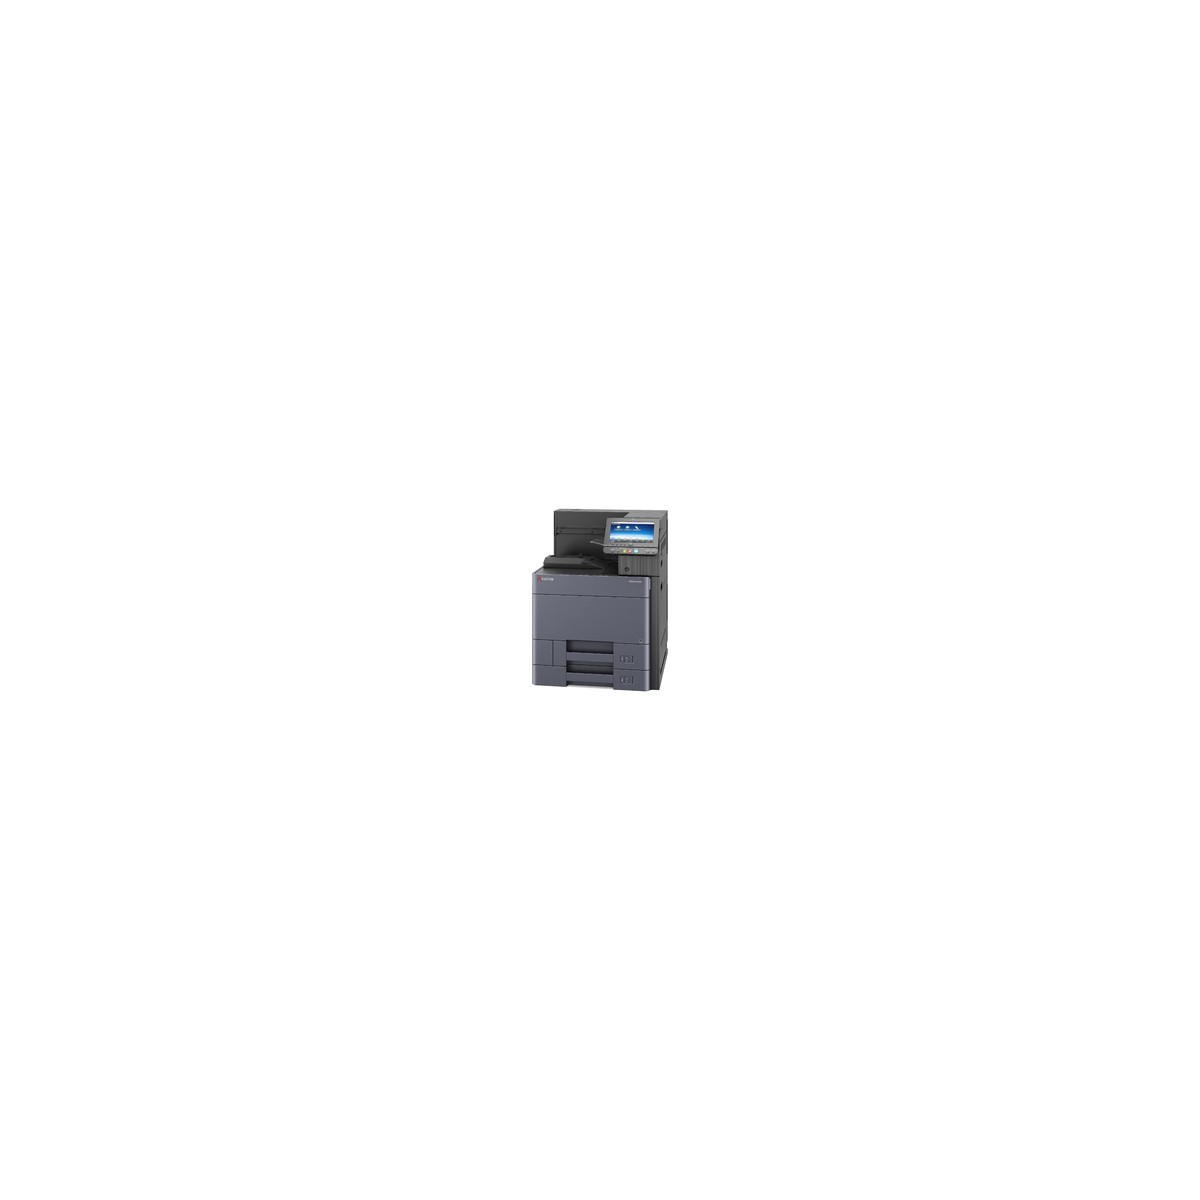 Kyocera ECOSYS P4060dn - Laser - 1200 x 1200 DPI - A3+ - 60 ppm - Duplex printing - Network ready